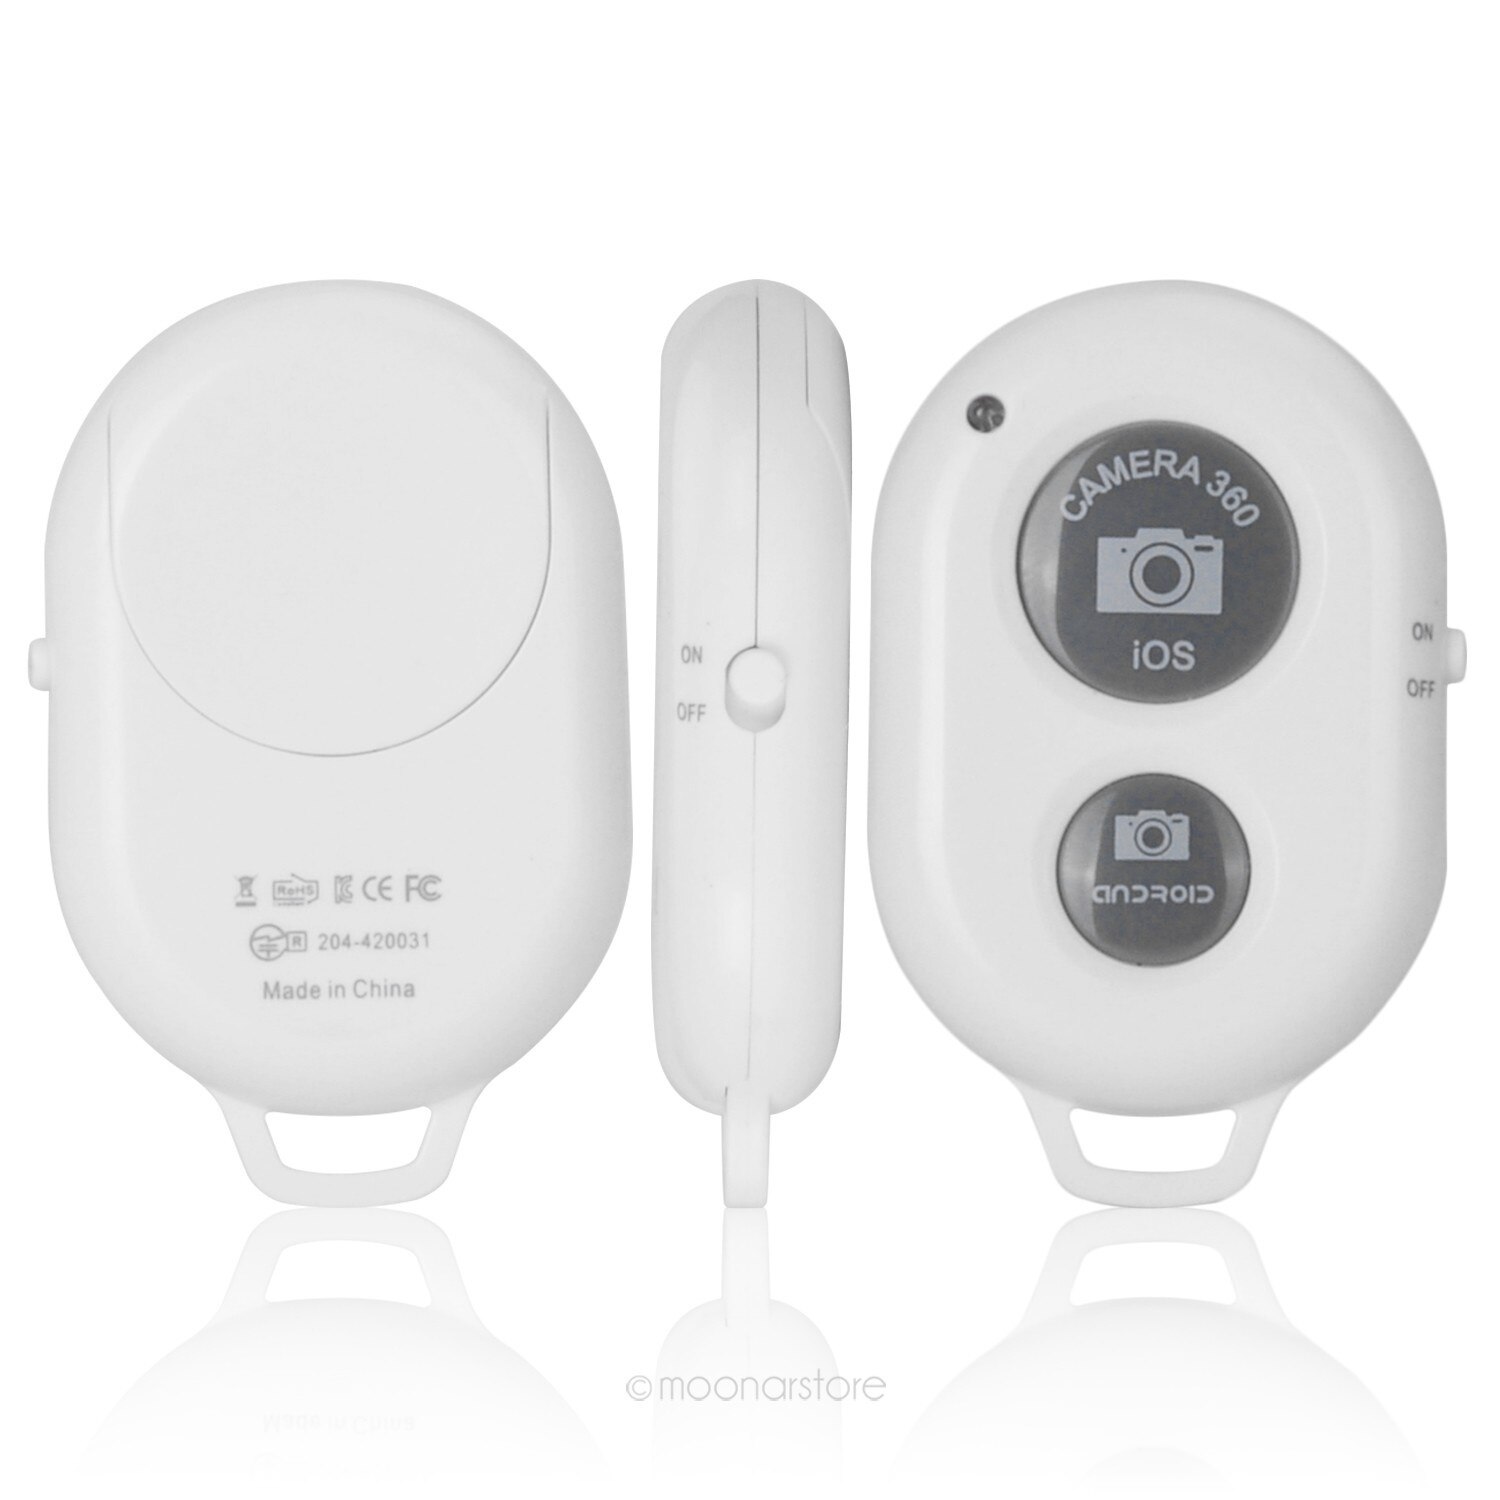 Centechia Universele Monopod Draadloze Bluetooth Remote Shutter zelfontspanner Zelfontspanner voor iPhone IOS Samsung Android xiaoni Oppo